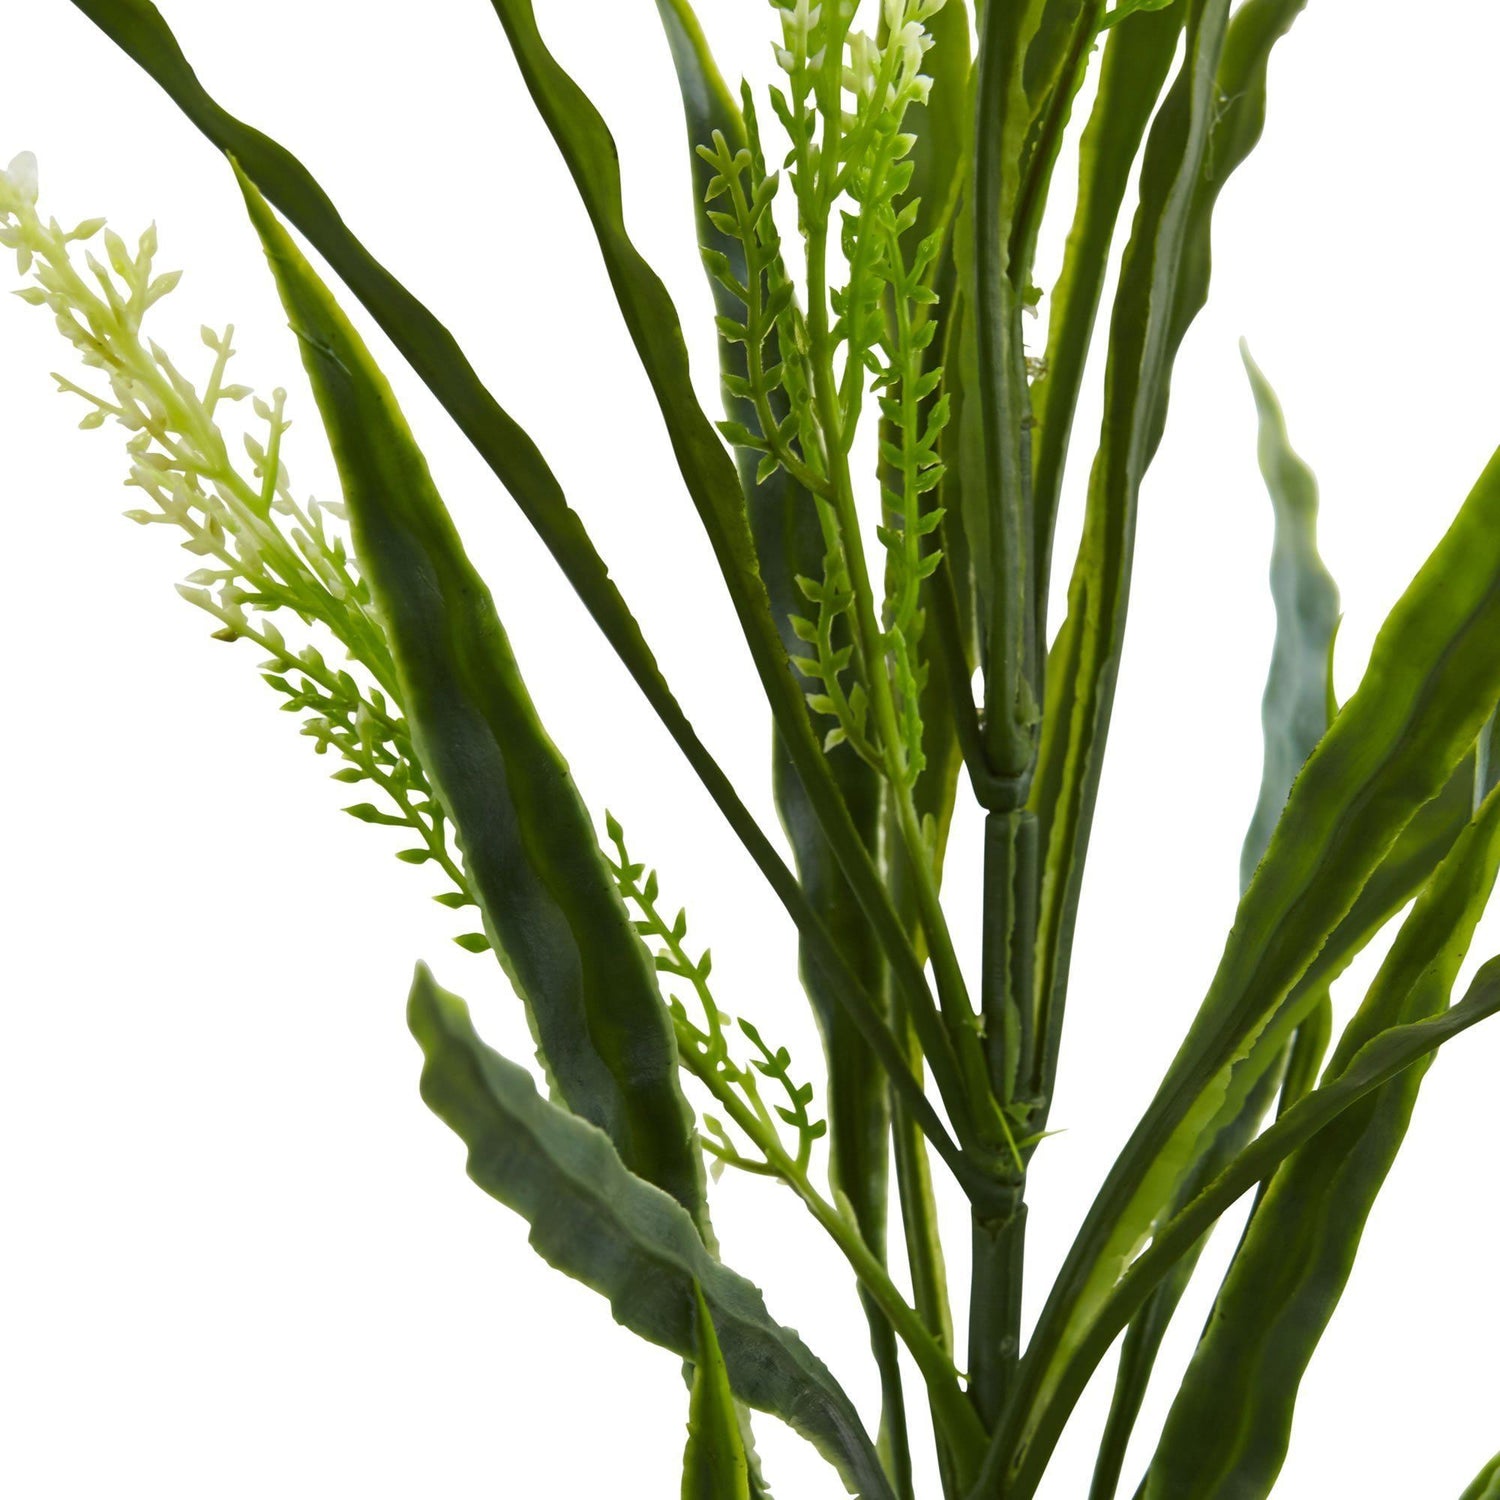 27’’ Vanilla Grass Artificial Plant (Set of 24)